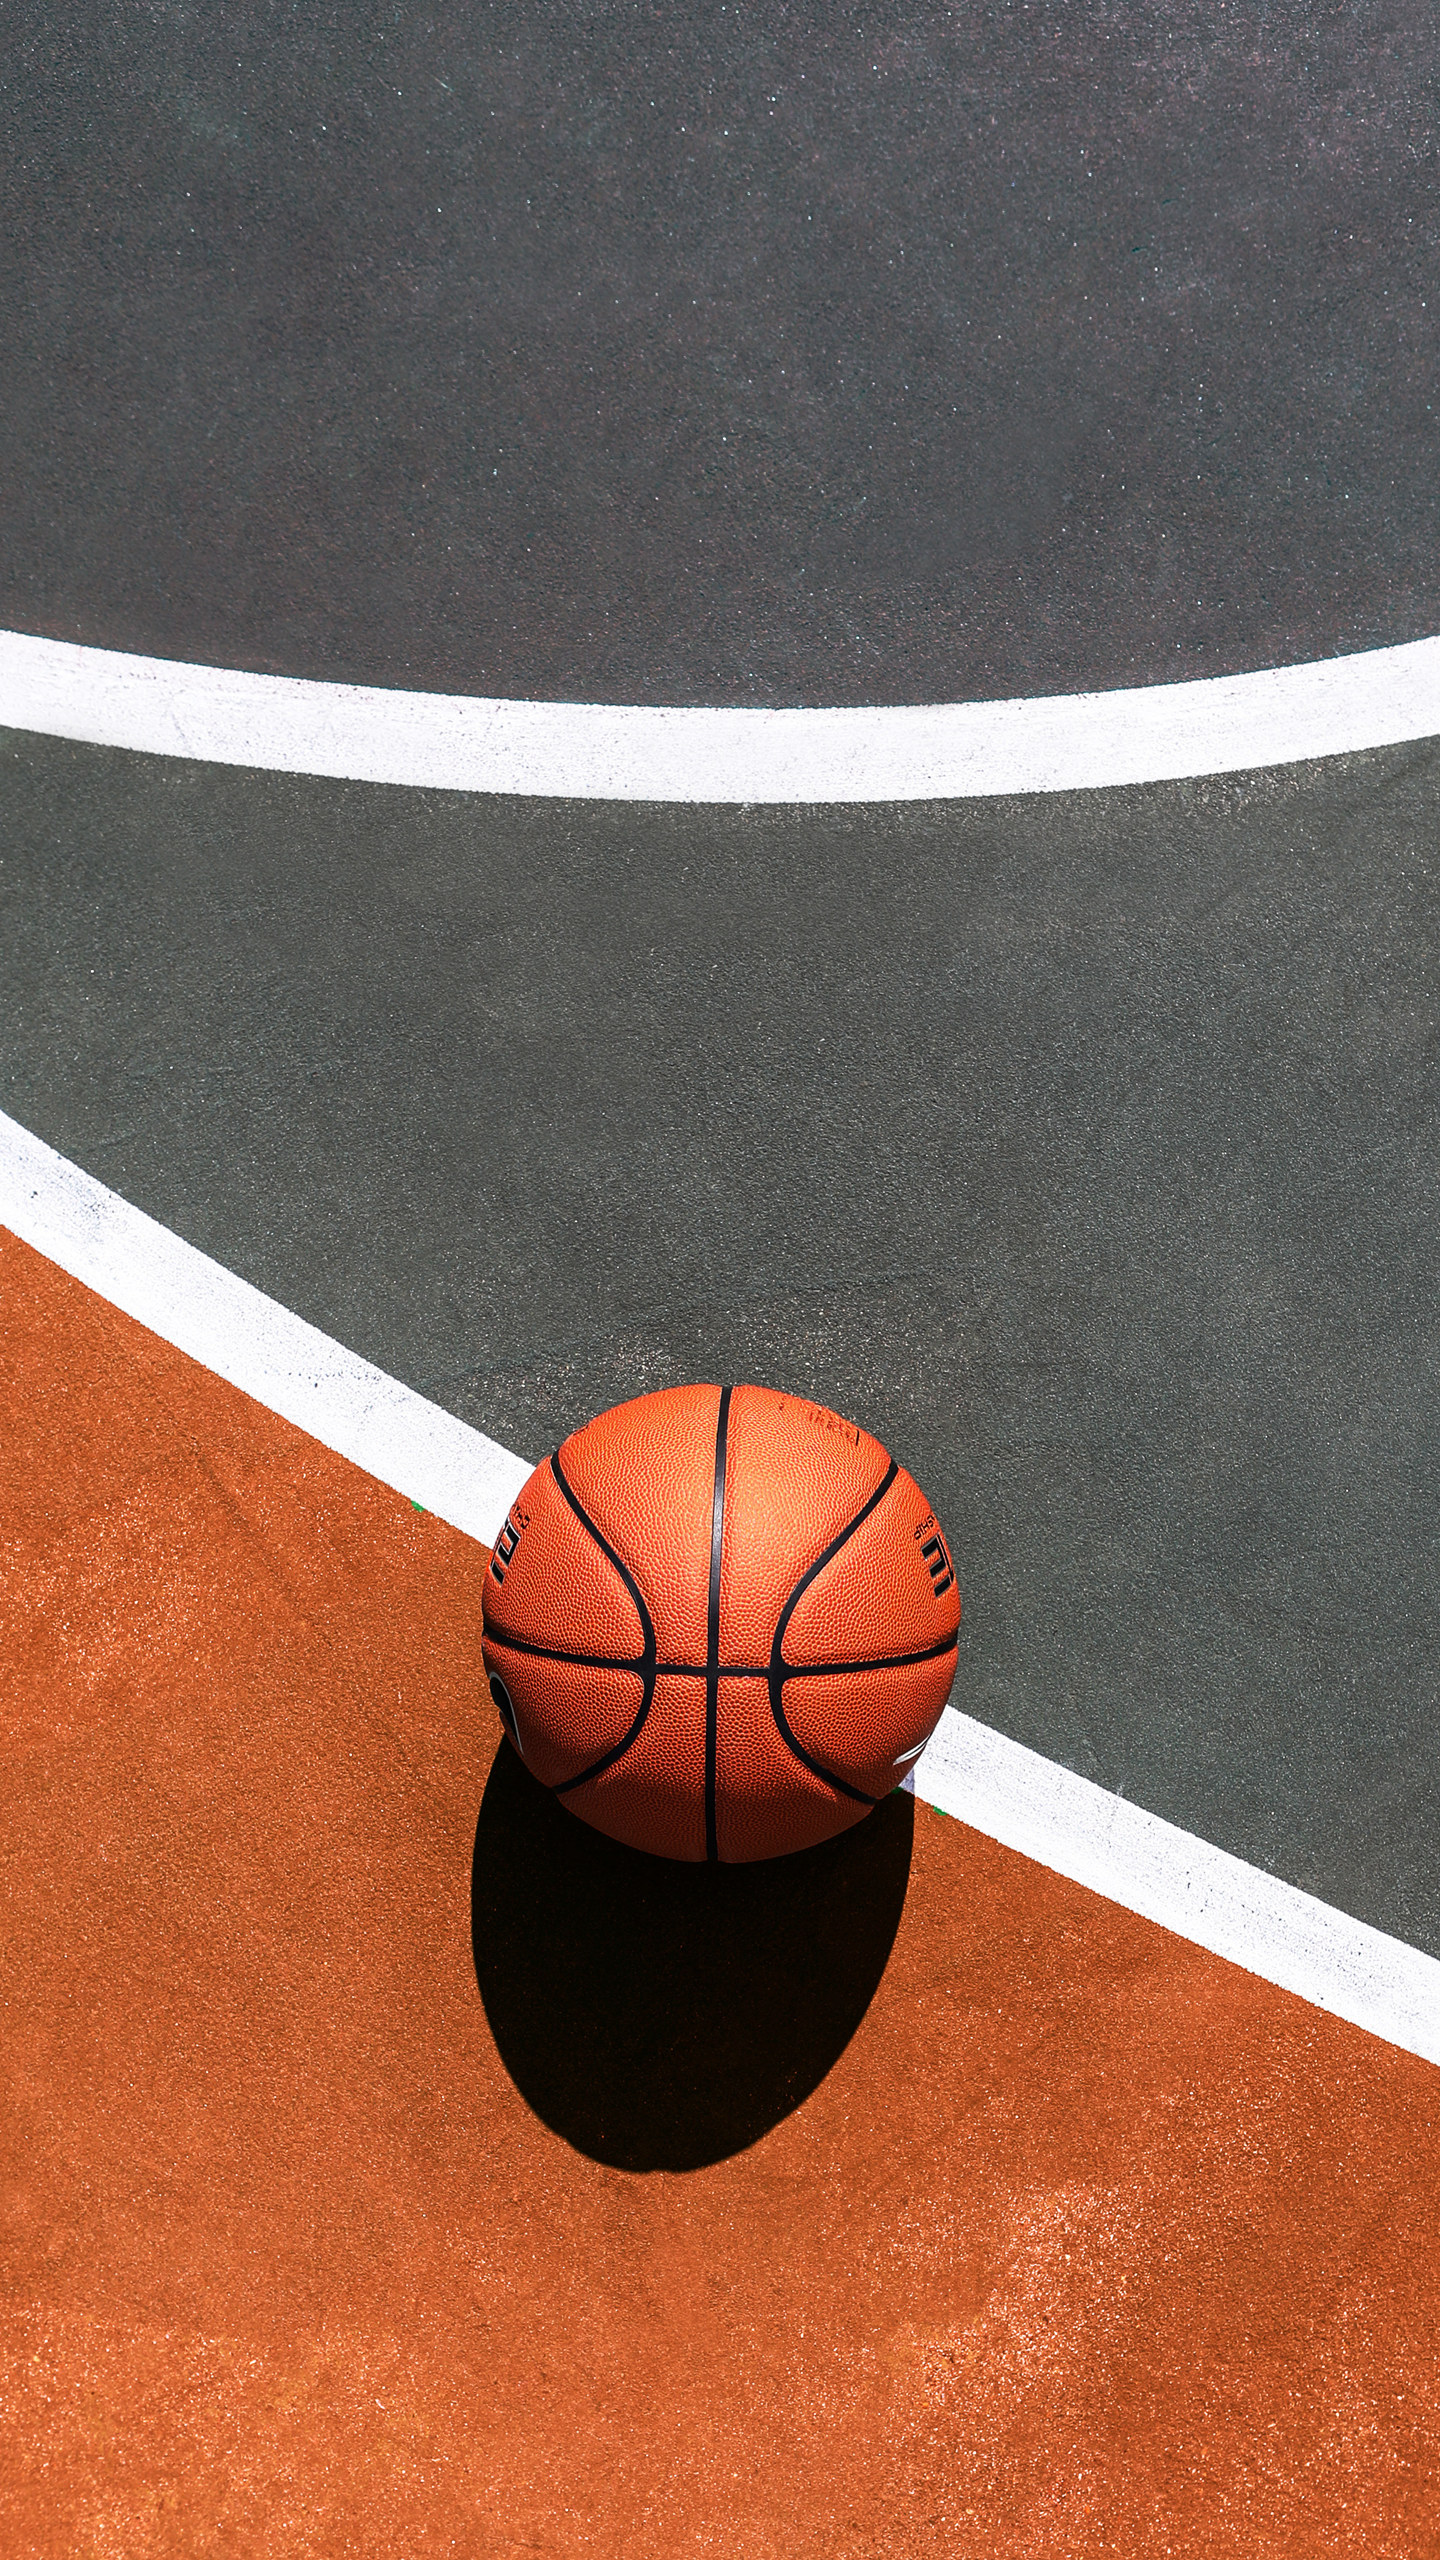 实拍<span style='color:red;'>篮球场</span>上的篮球高清手机壁纸